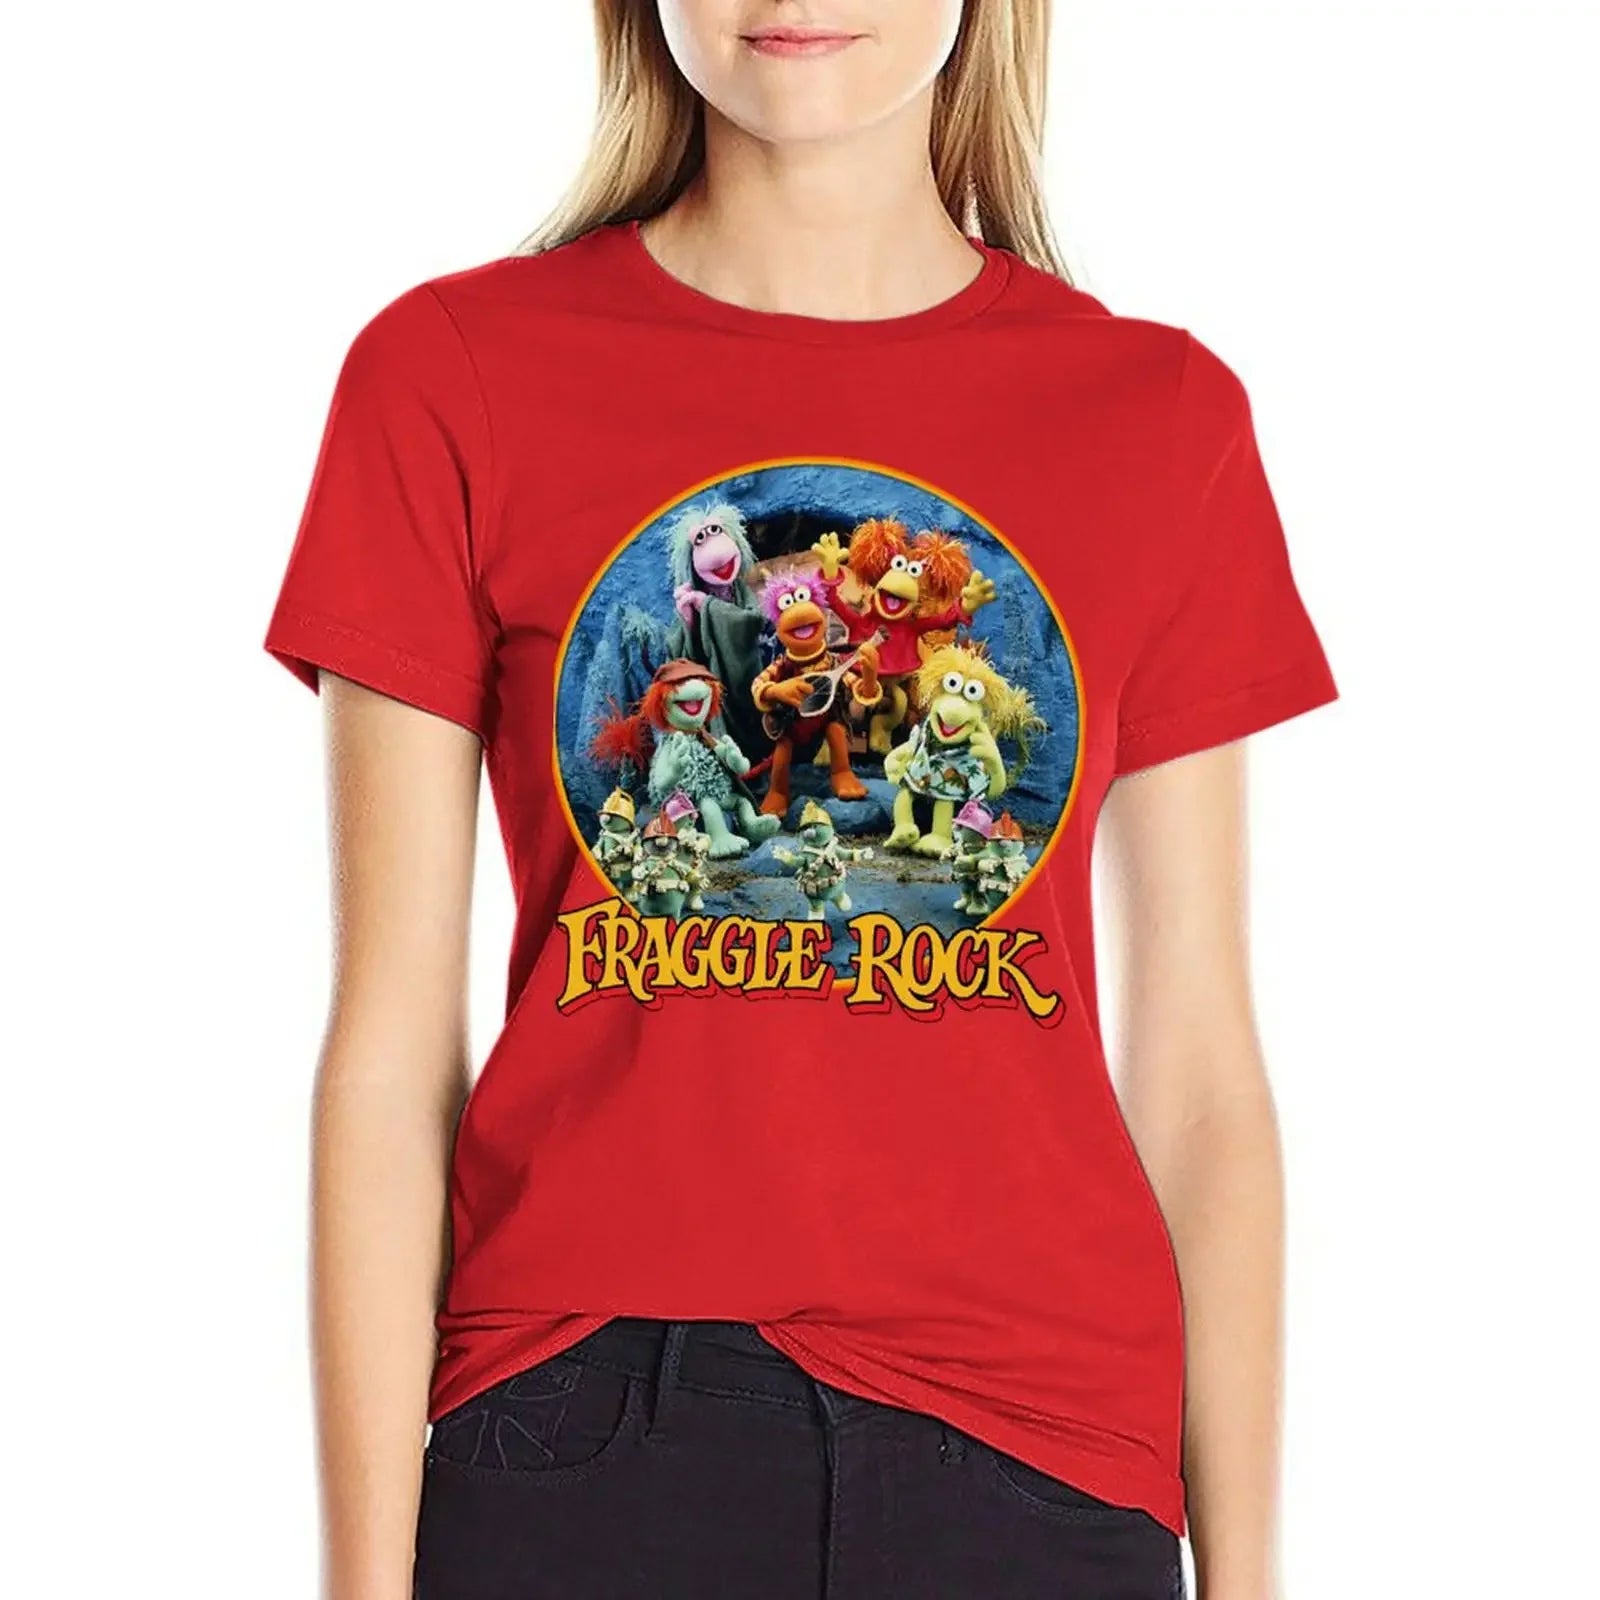 Fraggle Rock Muppets TV Show T-Shirt Gifts For Music Fans Music Vintage Retro Female Clothing Tops Short Sleeve Tee Women's Shirt - Lizard Vigilante